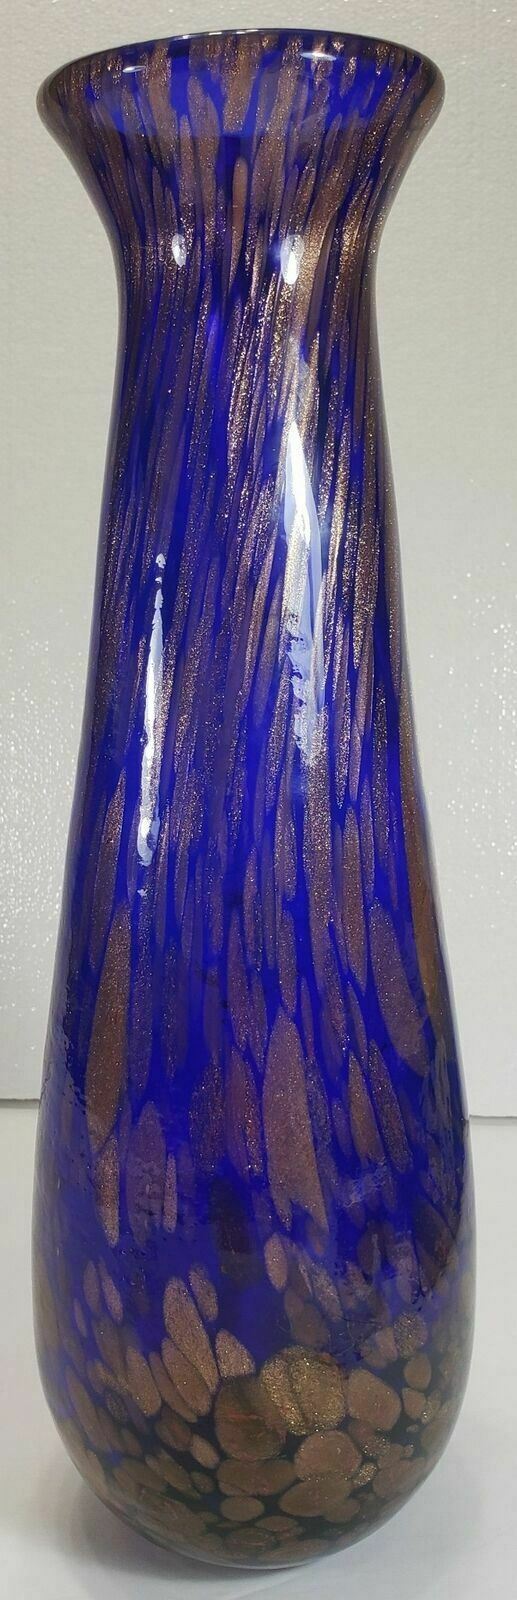 Murano Cobalt Blue & Embedded Gold Vase, 17 1/4" Tall Gorgeous!